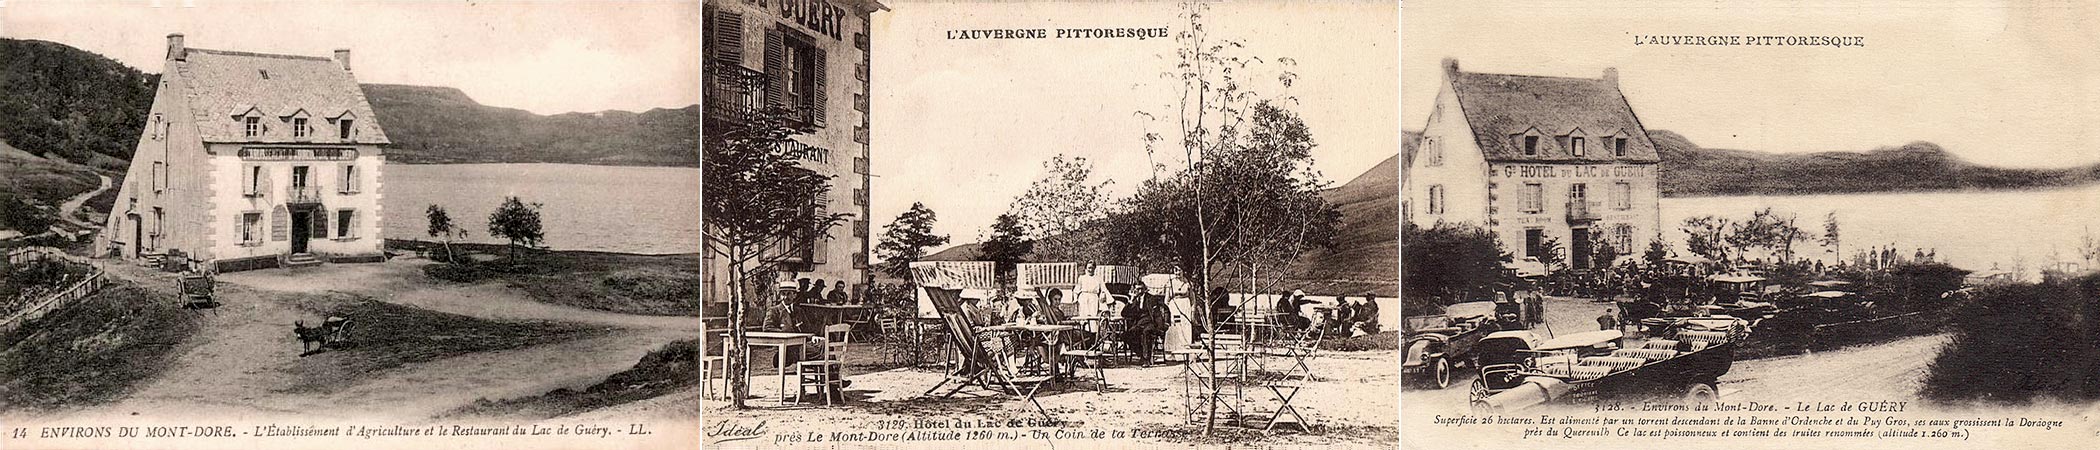 The Auberge du Lac de Guéry over time